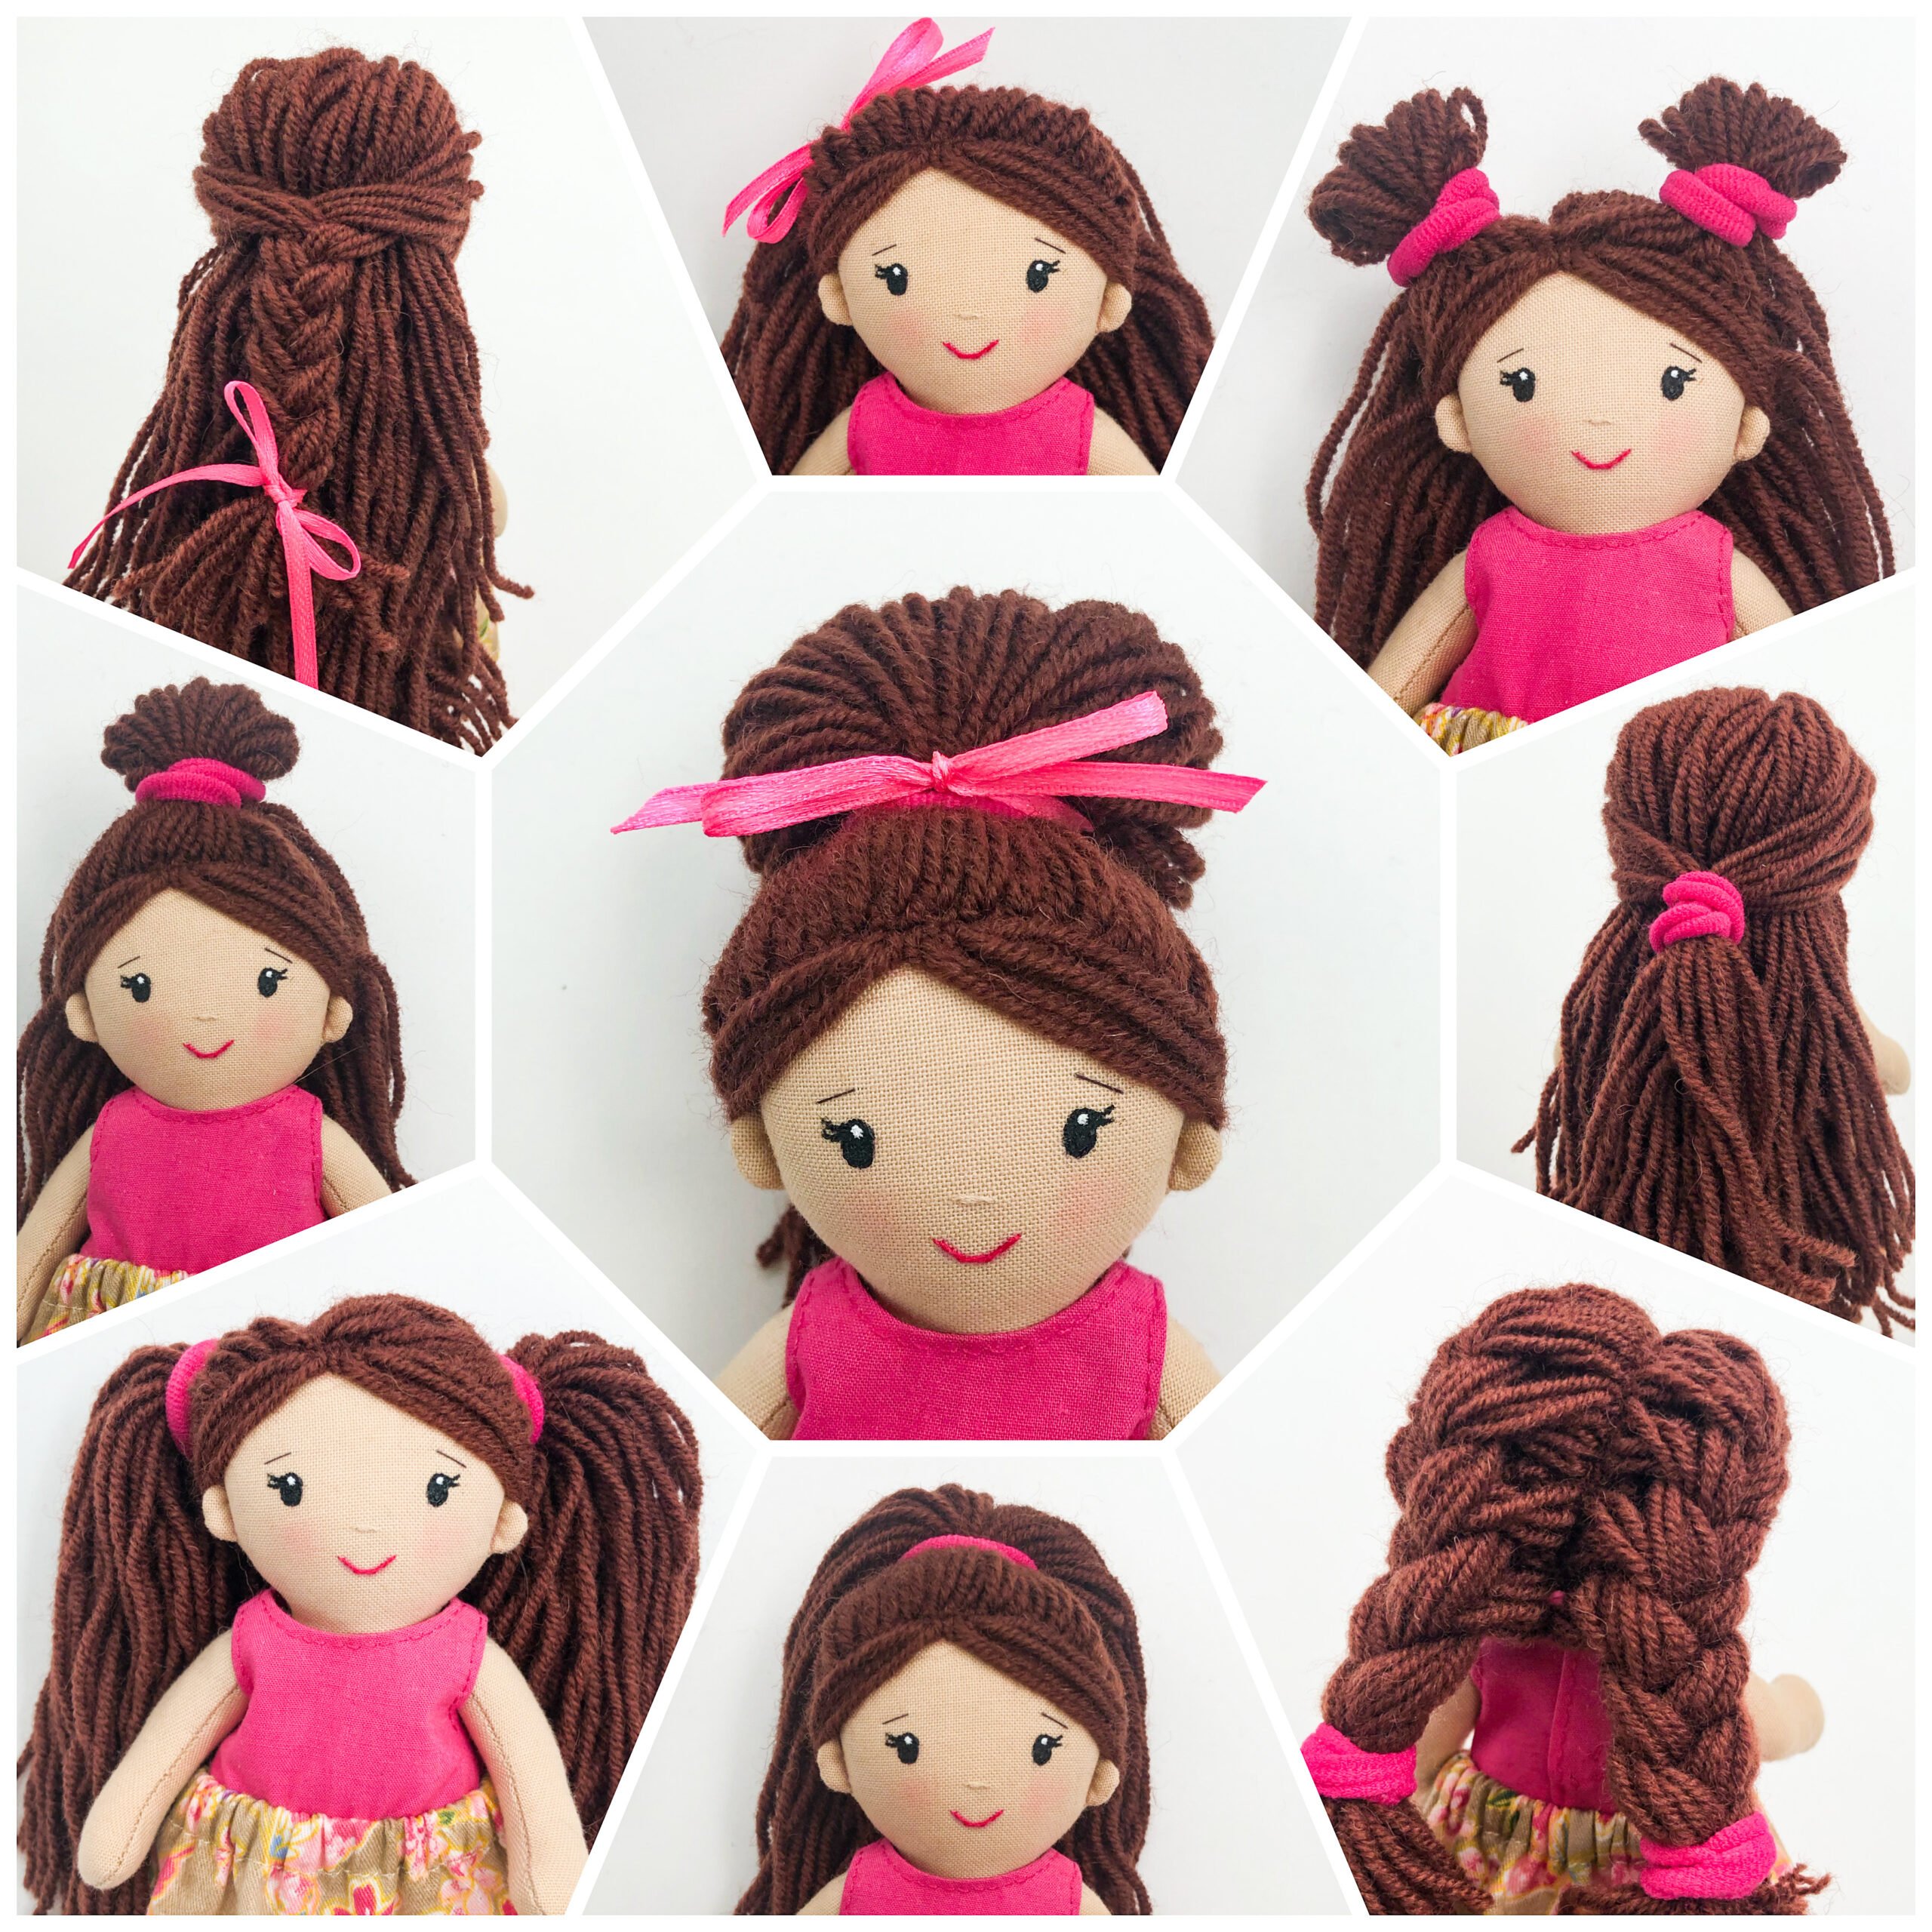 Doll hair pattern, Rag doll hair making tutorial in PDF - DailyDoll Shop